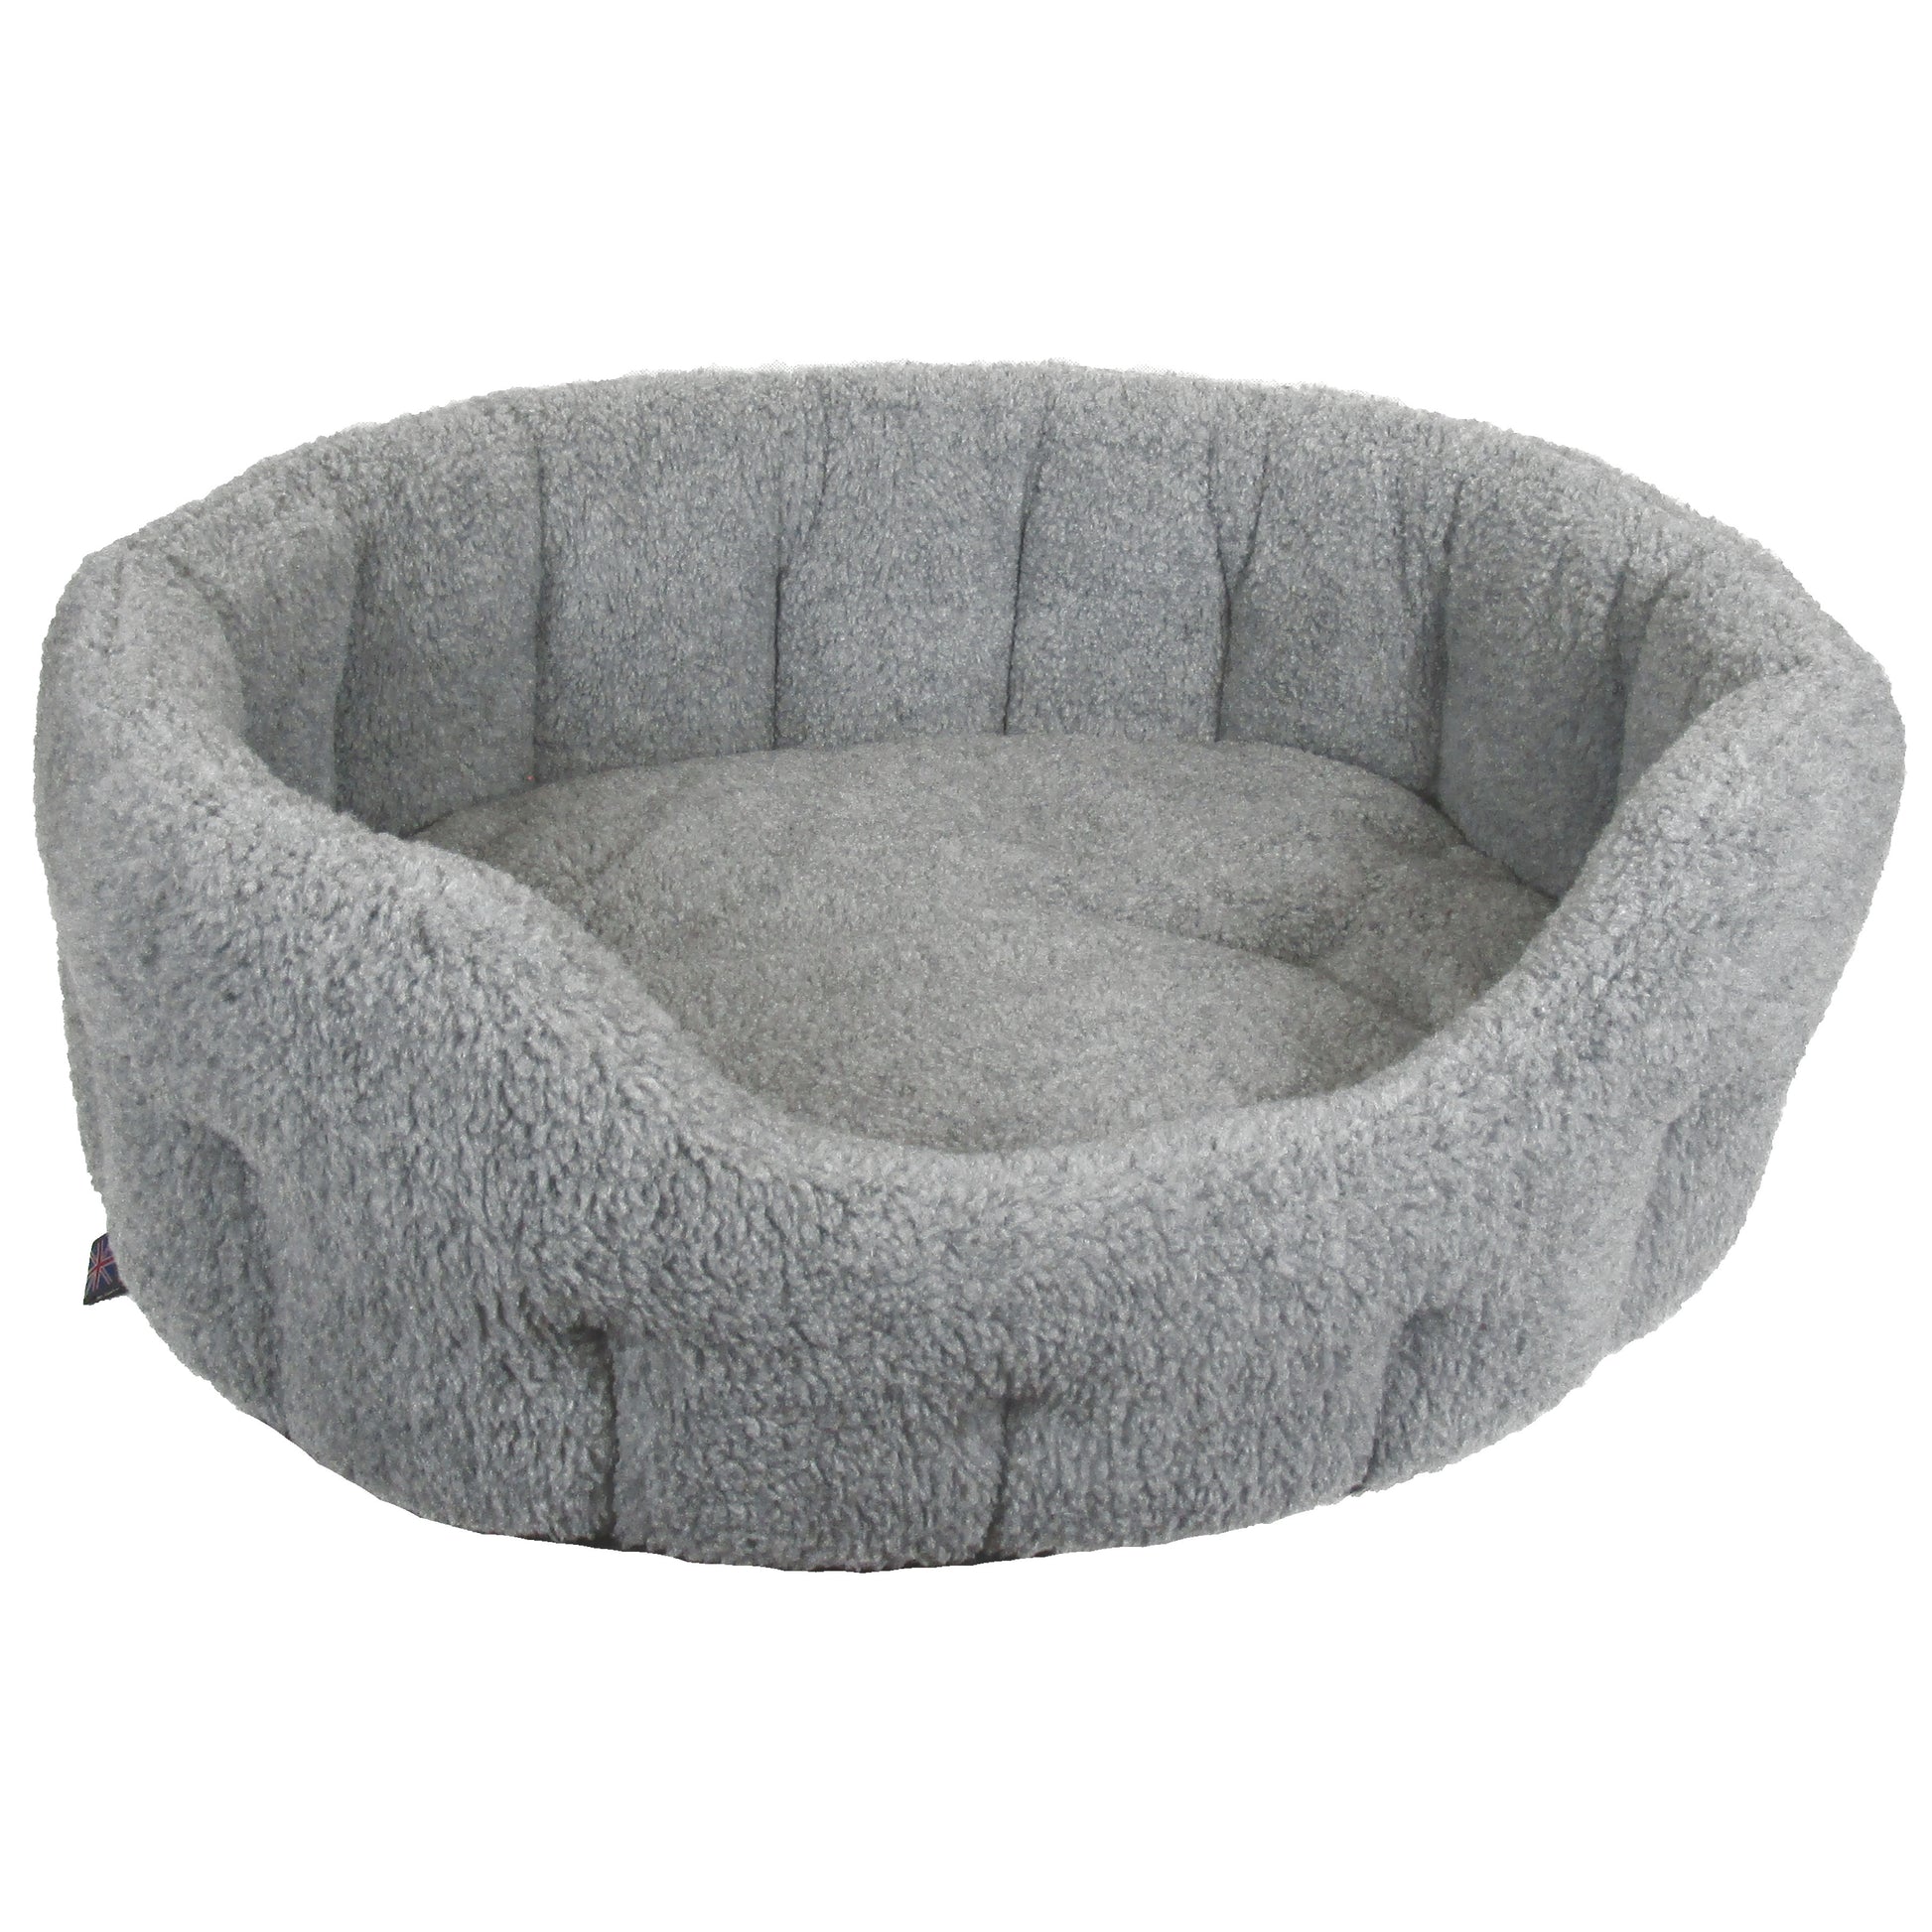 P&L Premium Oval Fleece Dog Bed